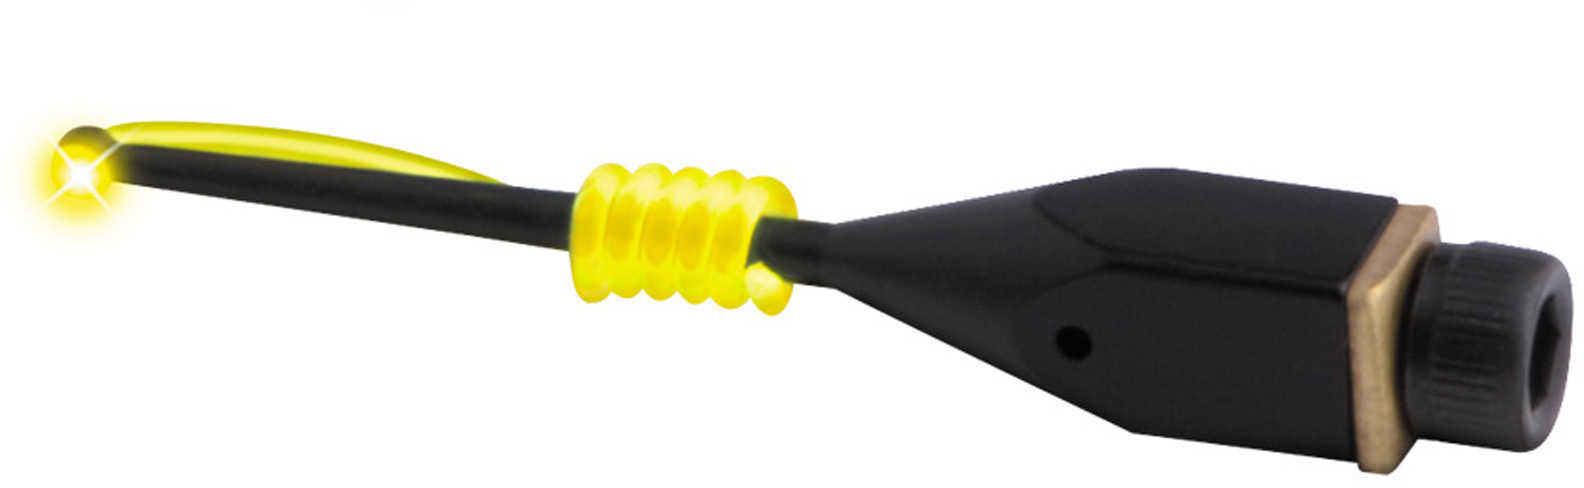 Truglo Pro-Wrap Pin .019 Yellow TG844WY